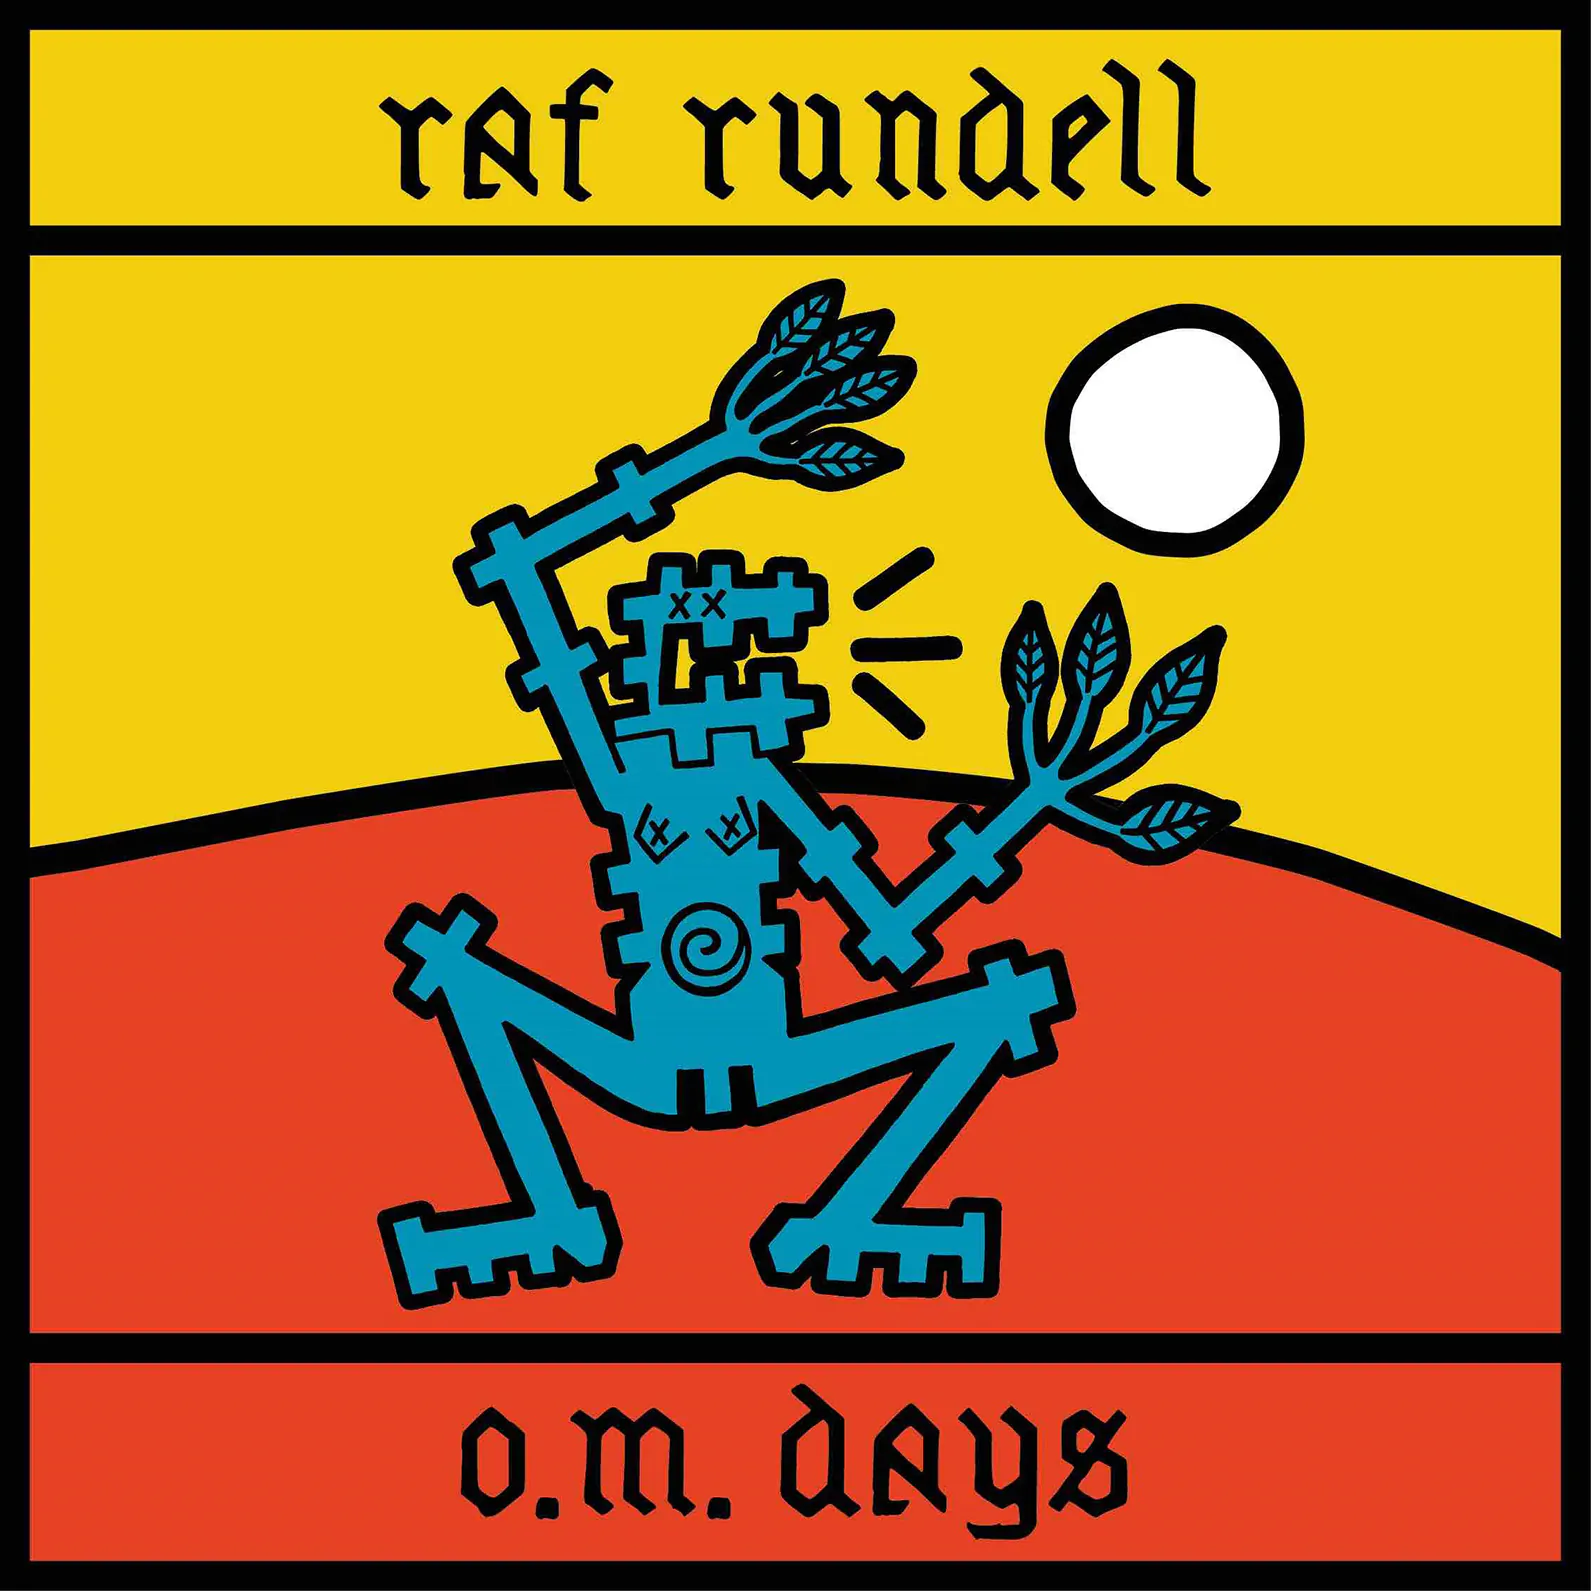 ALBUM REVIEW: Raf Rundell - O.M. Days 